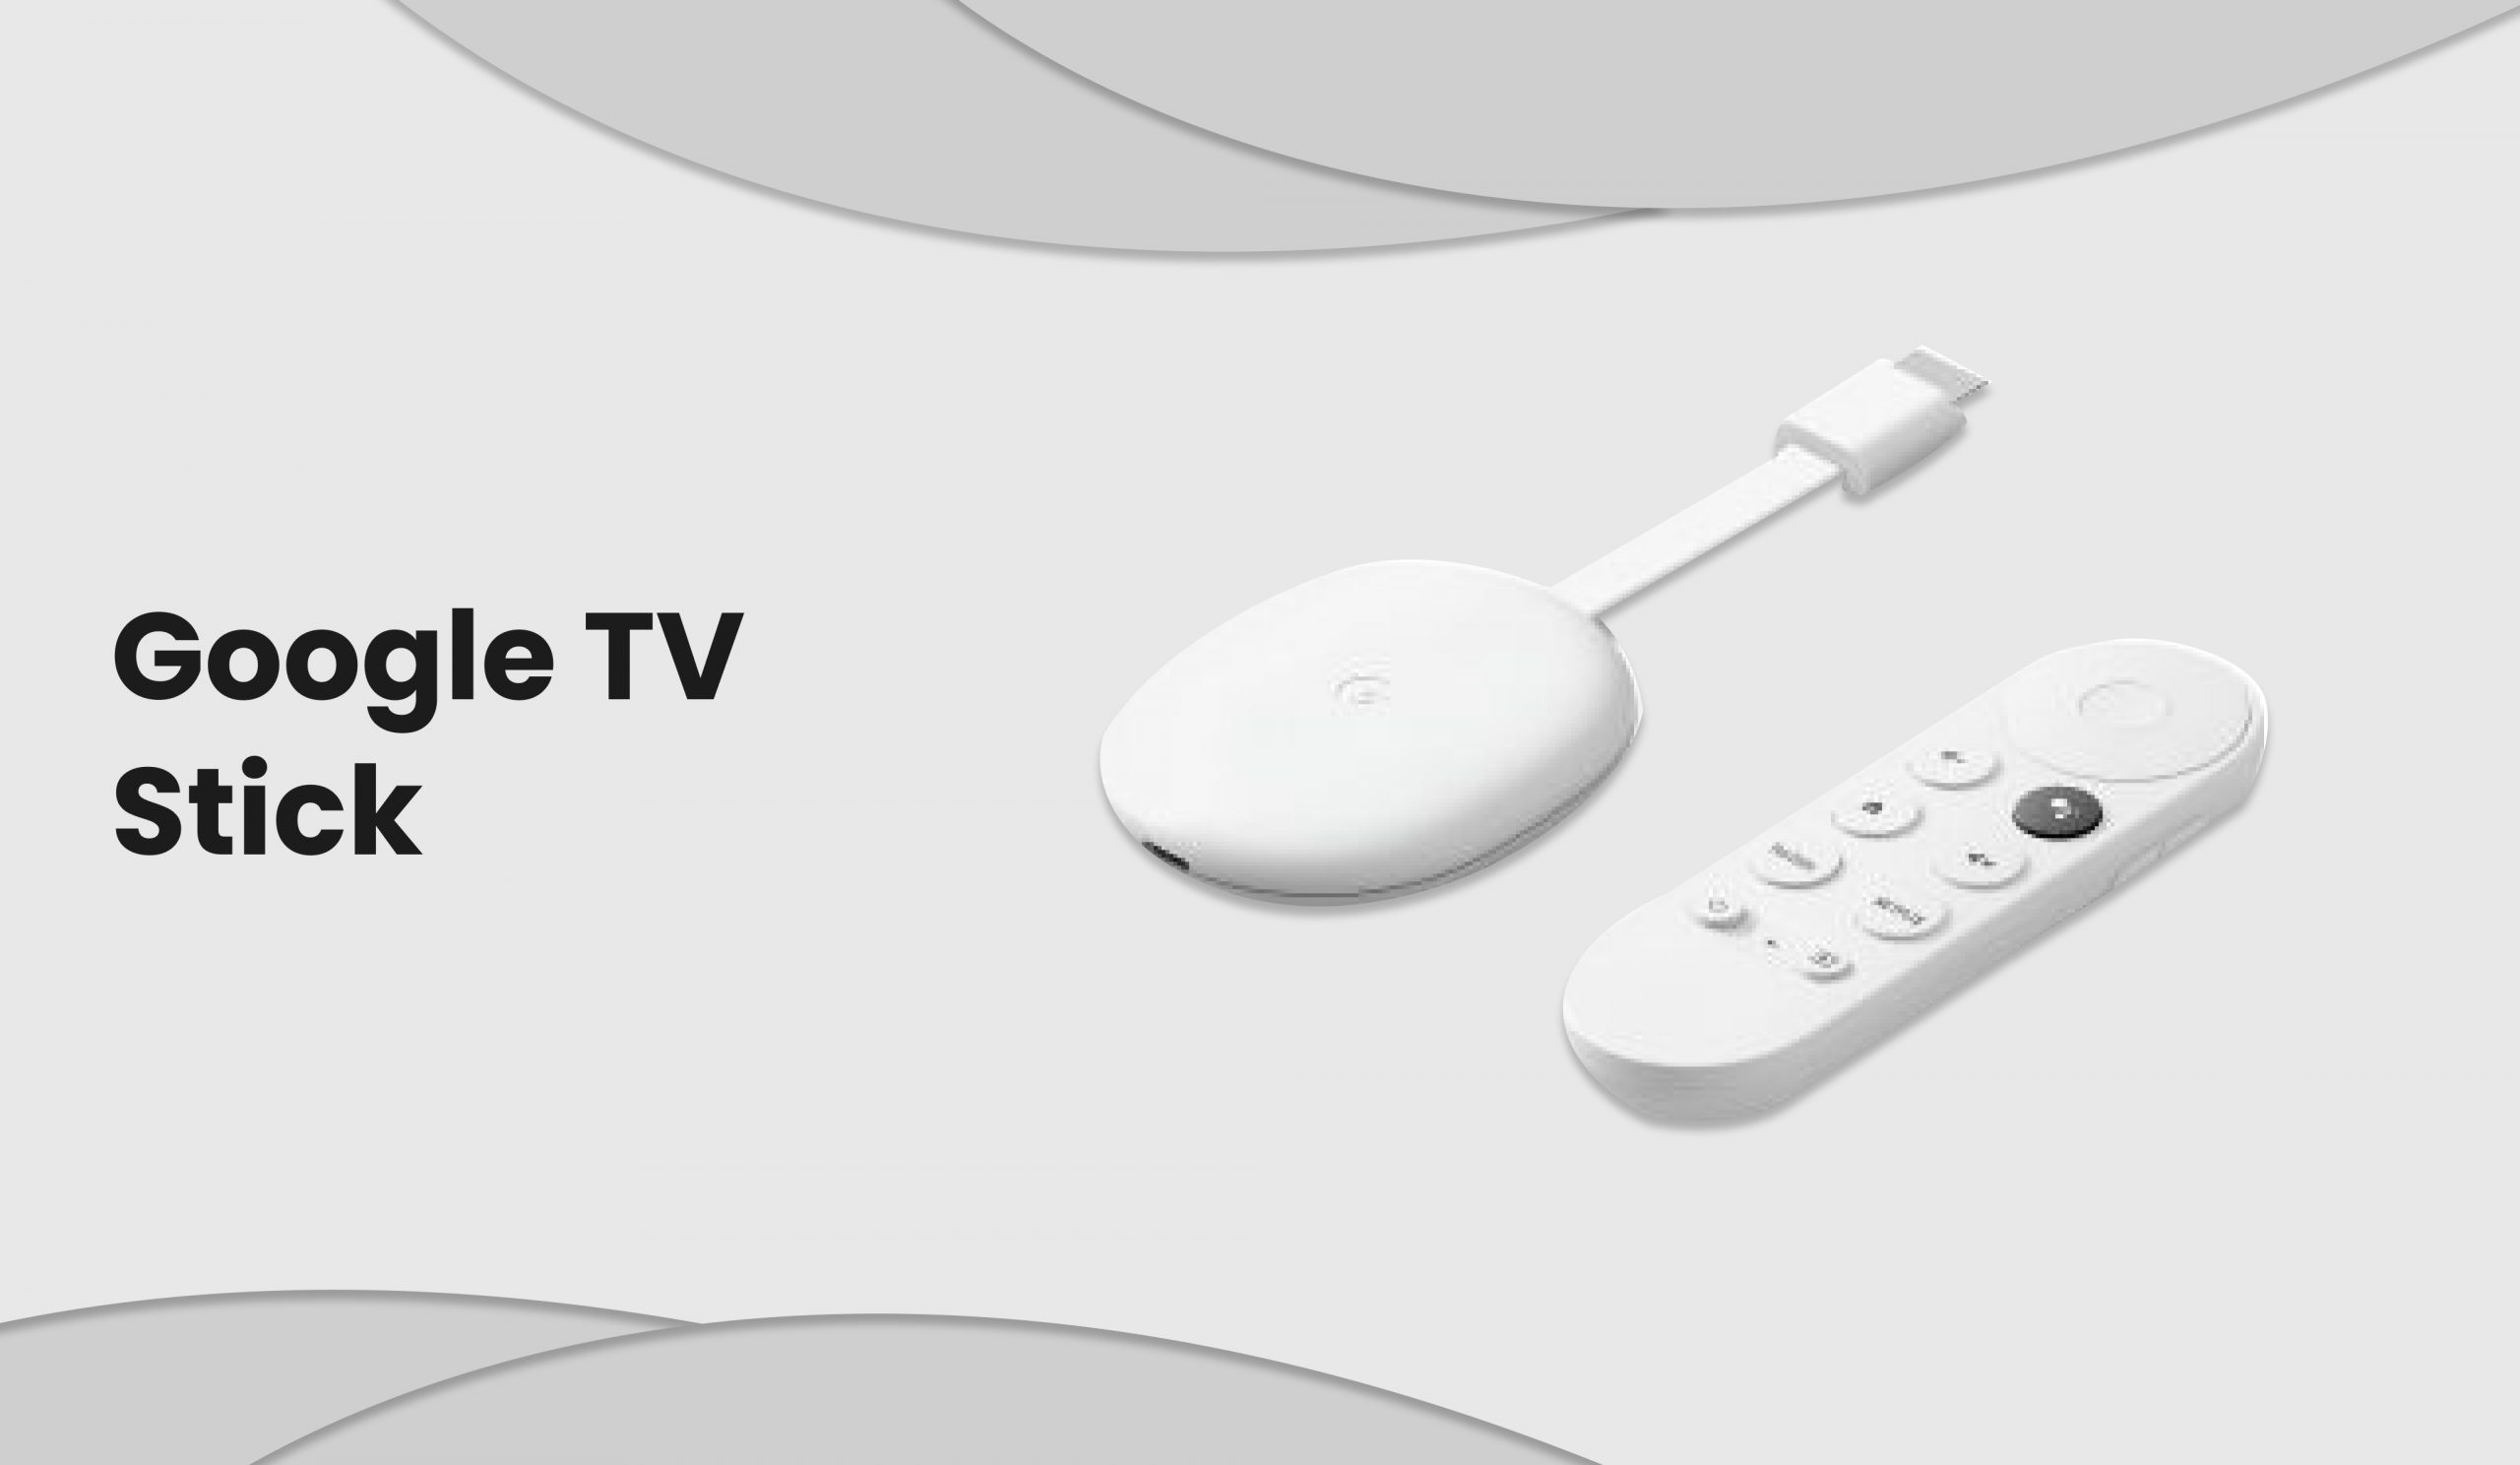 New Google Chromecast gains a remote and Google TV interface